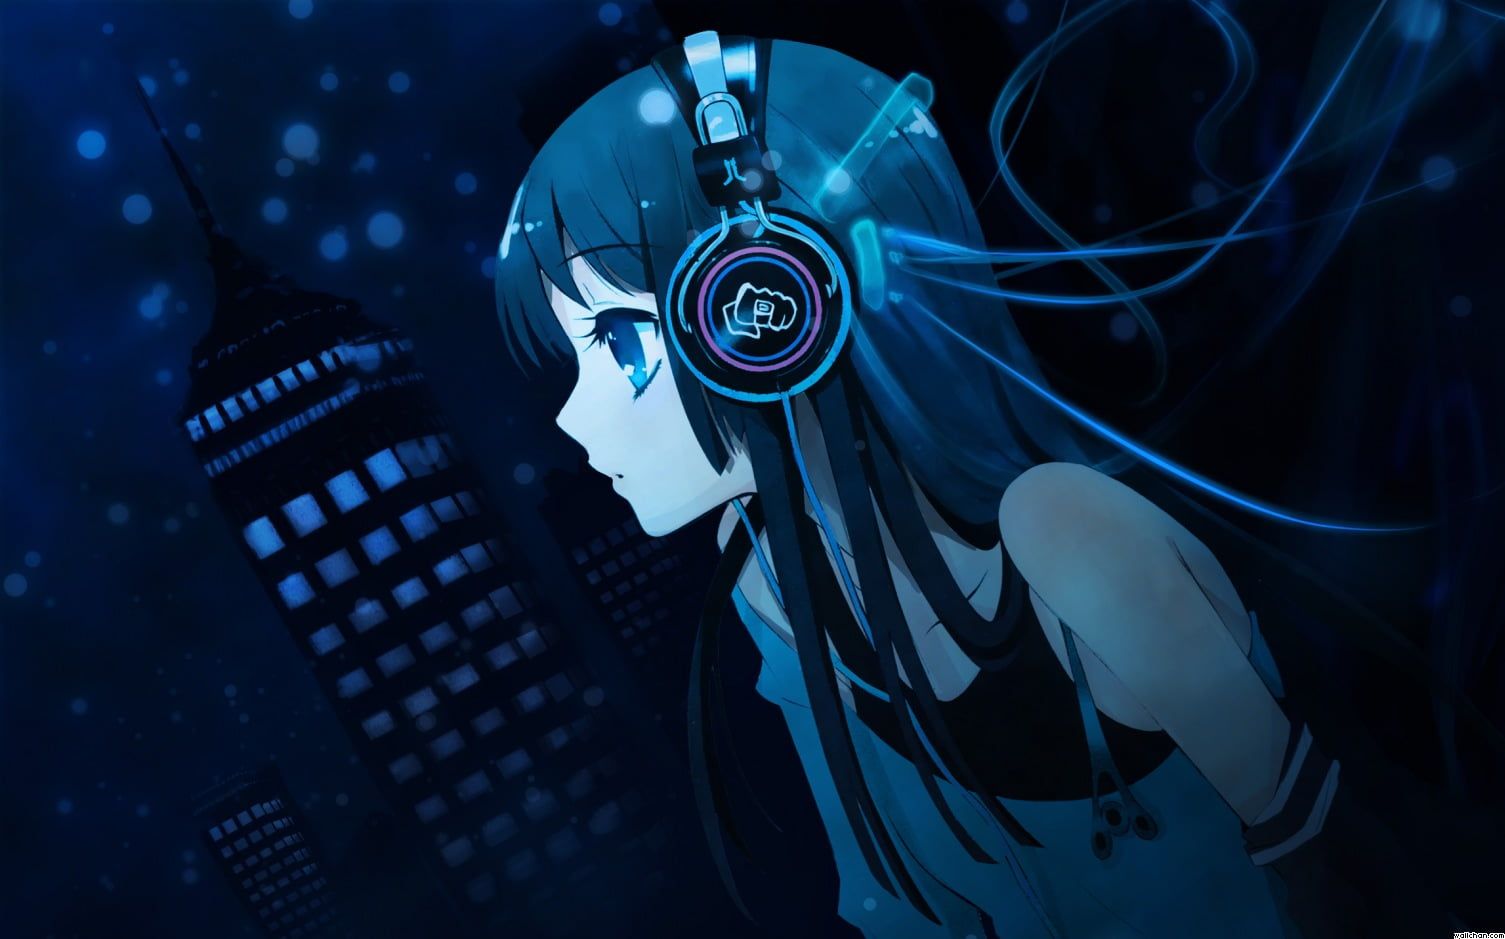 HD Wallpaper: Anime, Anime Girls, Headphones, Technology, No People, Close Up. Anime, Papel De Parede Anime, Wallpaper Legais De Anime